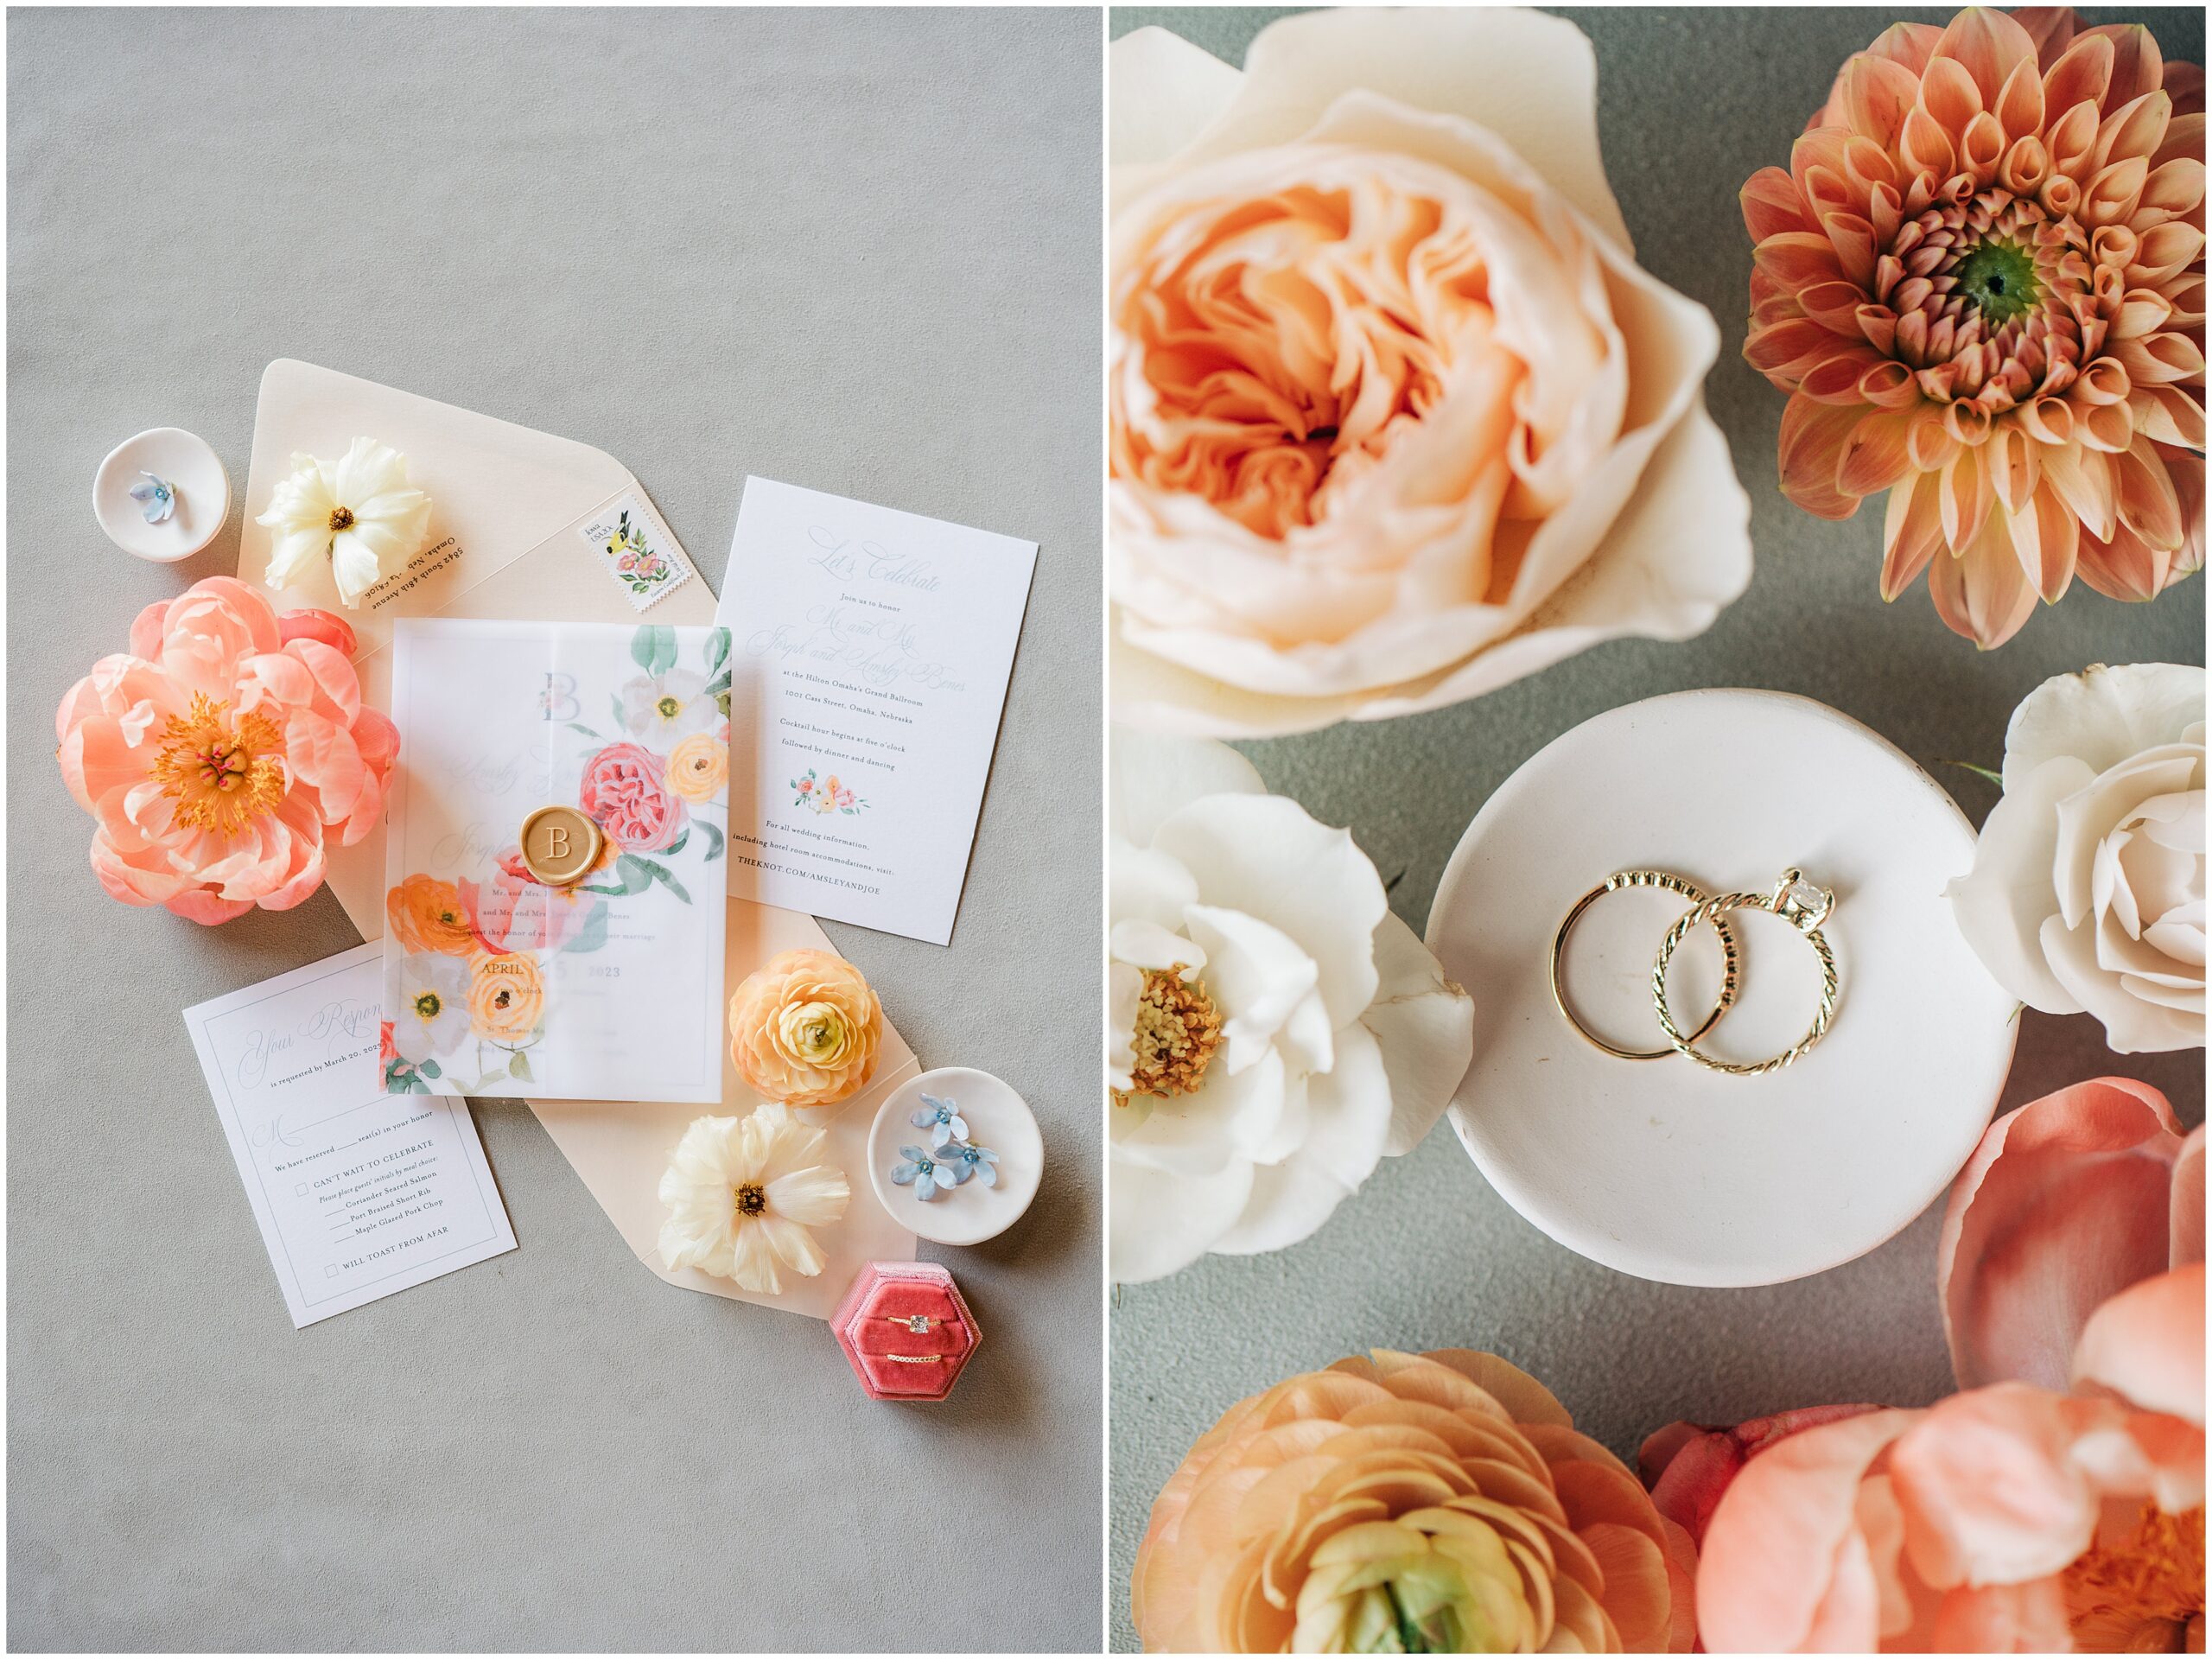 Dana Osborne Design created a blush, peach, and blue wedding invitation with a floral vellum wrap and gold seals. Photography by Omaha Wedding Photographer 
Anna Brace.